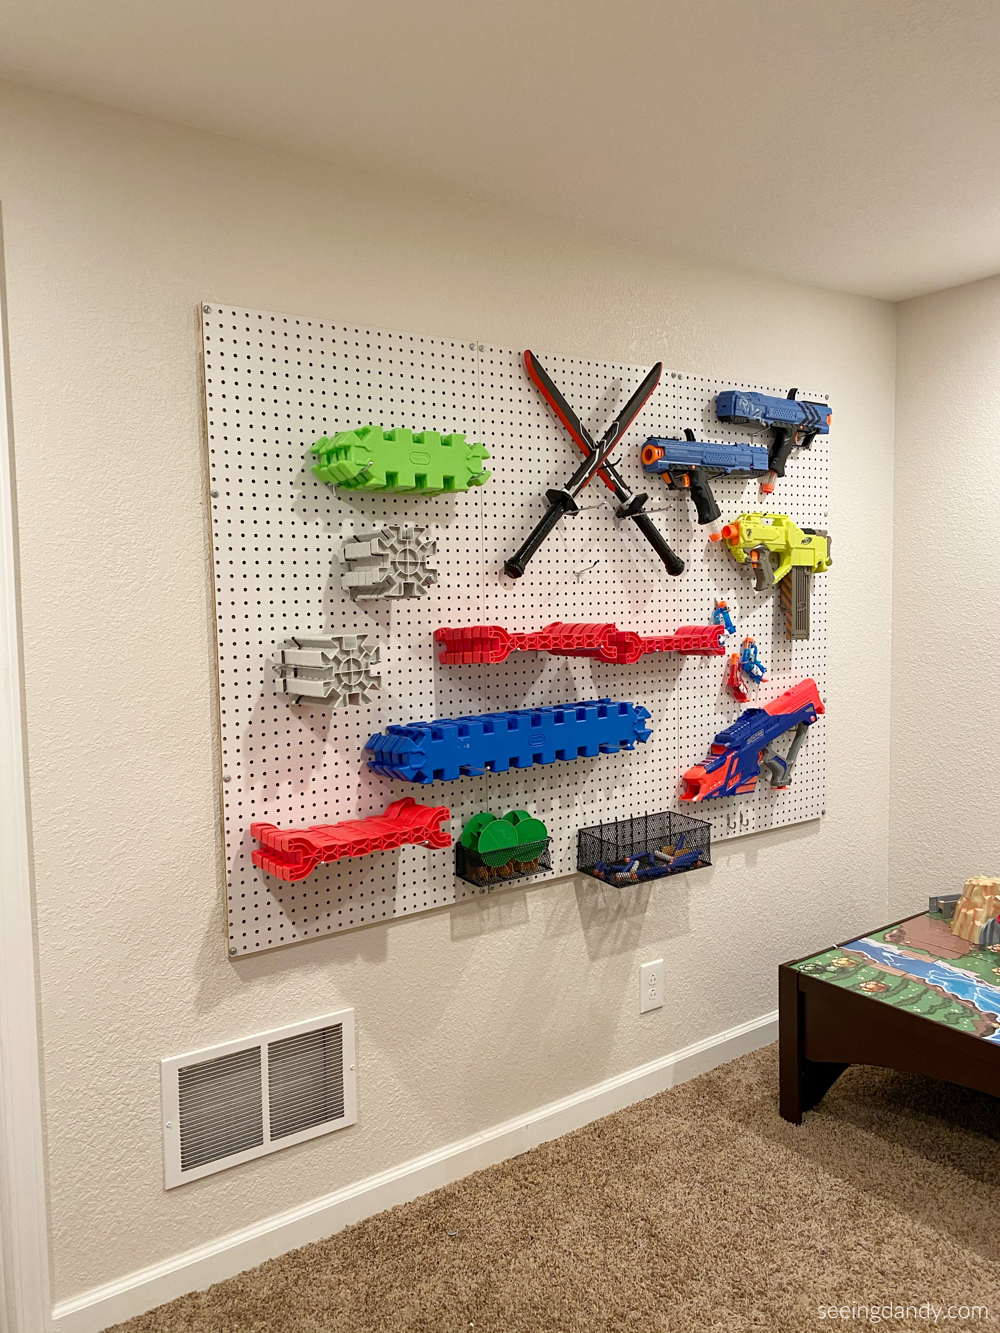 maskine Flyve drage Klassifikation The DIY Nerf Gun Storage Wall You Need At Your House - Seeing Dandy Blog